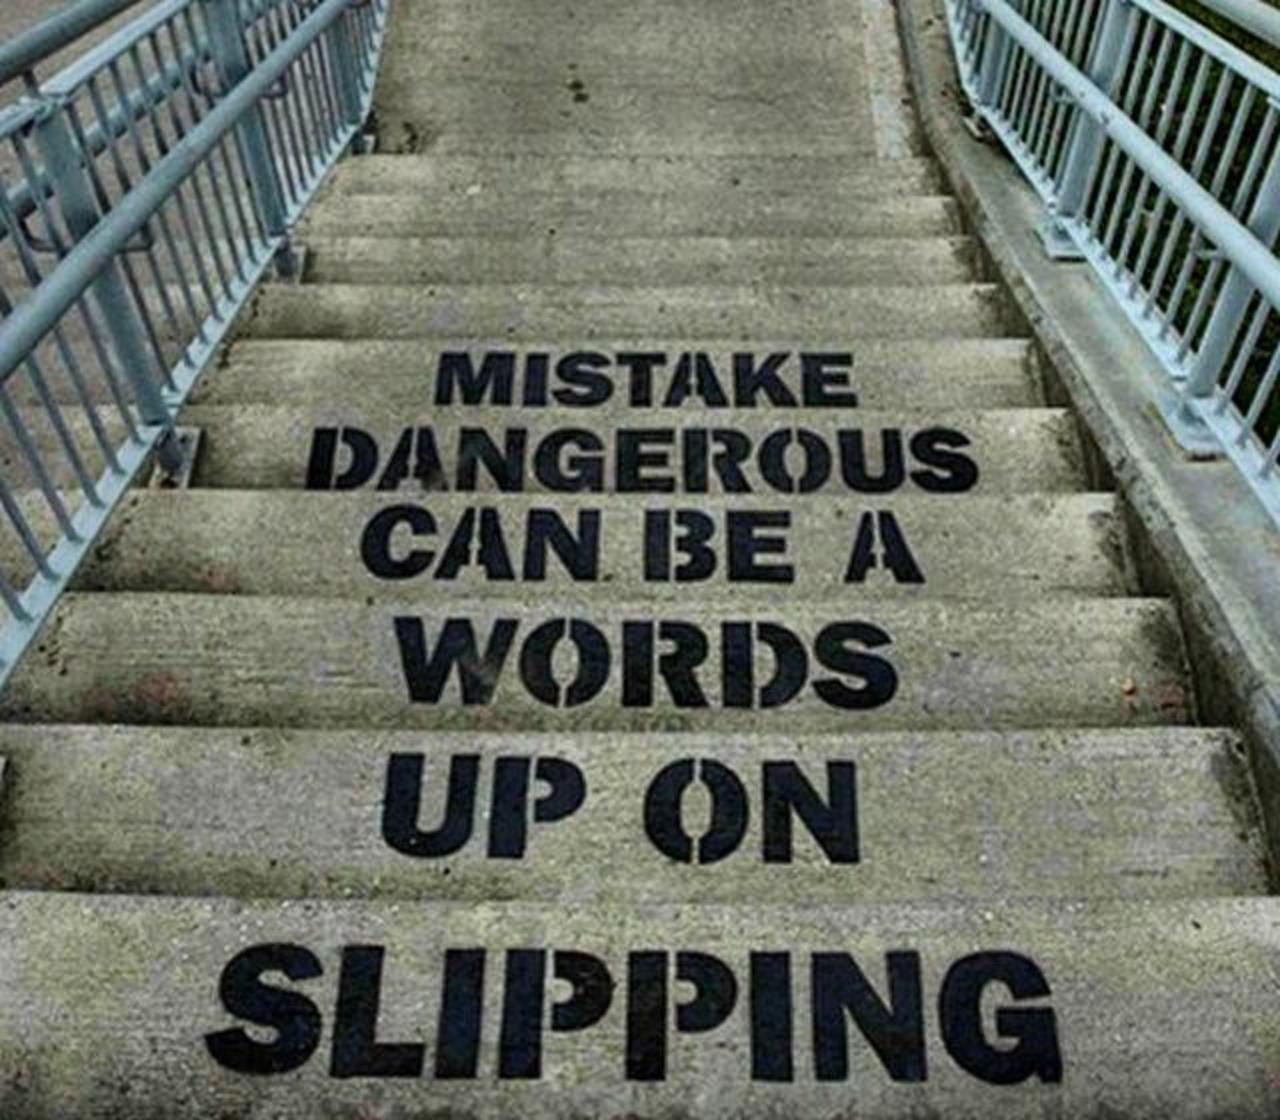 Slipping up on words can be a dangerous mistake 

Street Art by m.obstr 

#art #arte #graffiti #streetart http://t.co/DpIVqzGubd